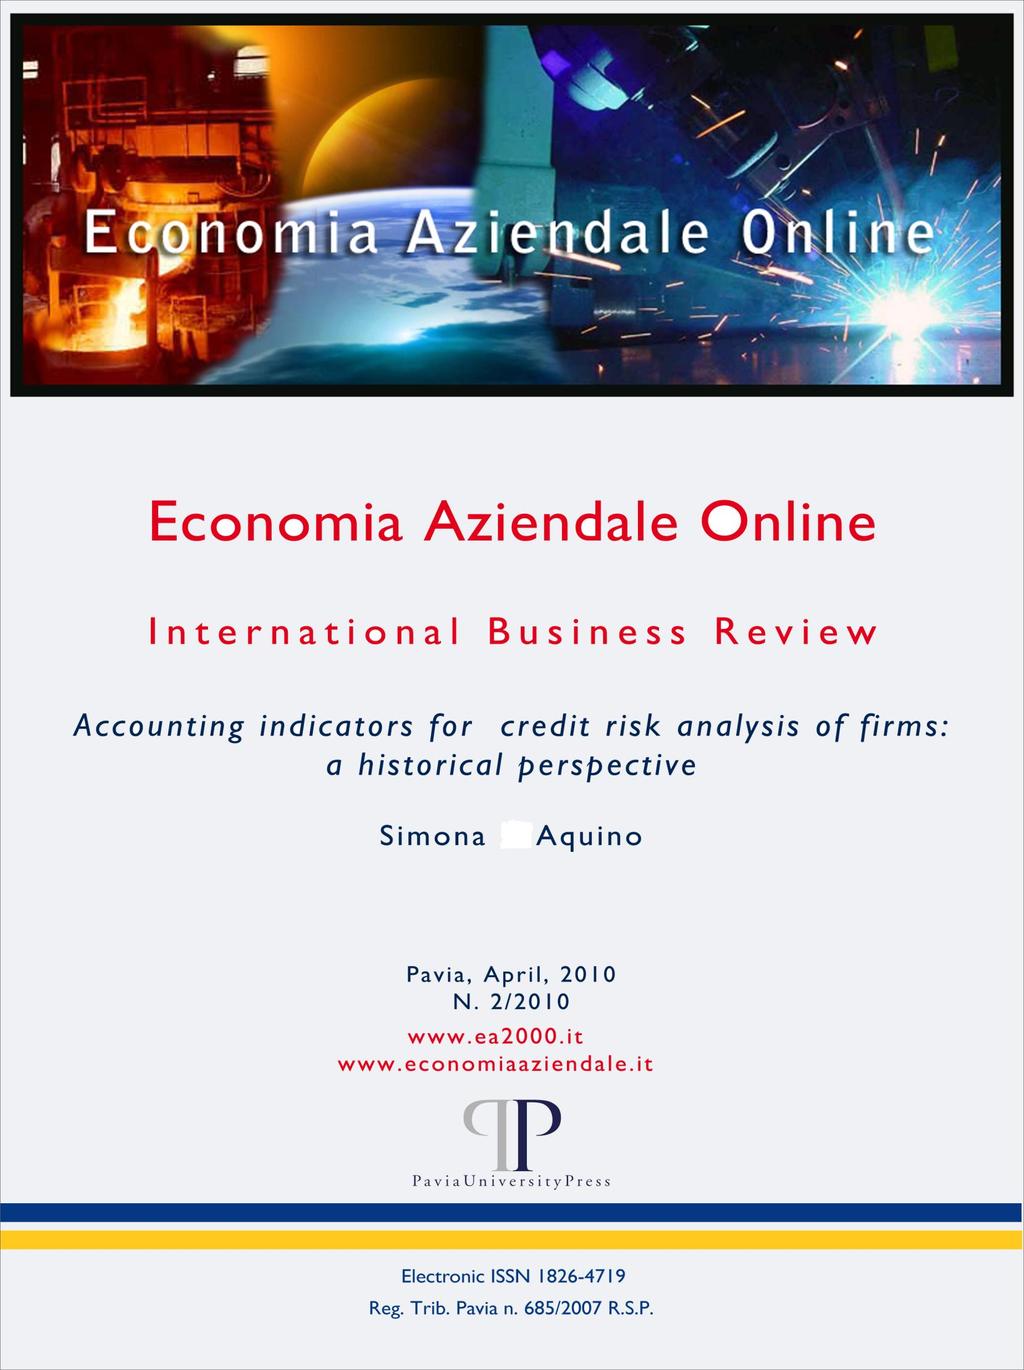 Economia Aziendale Online 2000 Web (2010) 1: 119-137 www.ea2000.